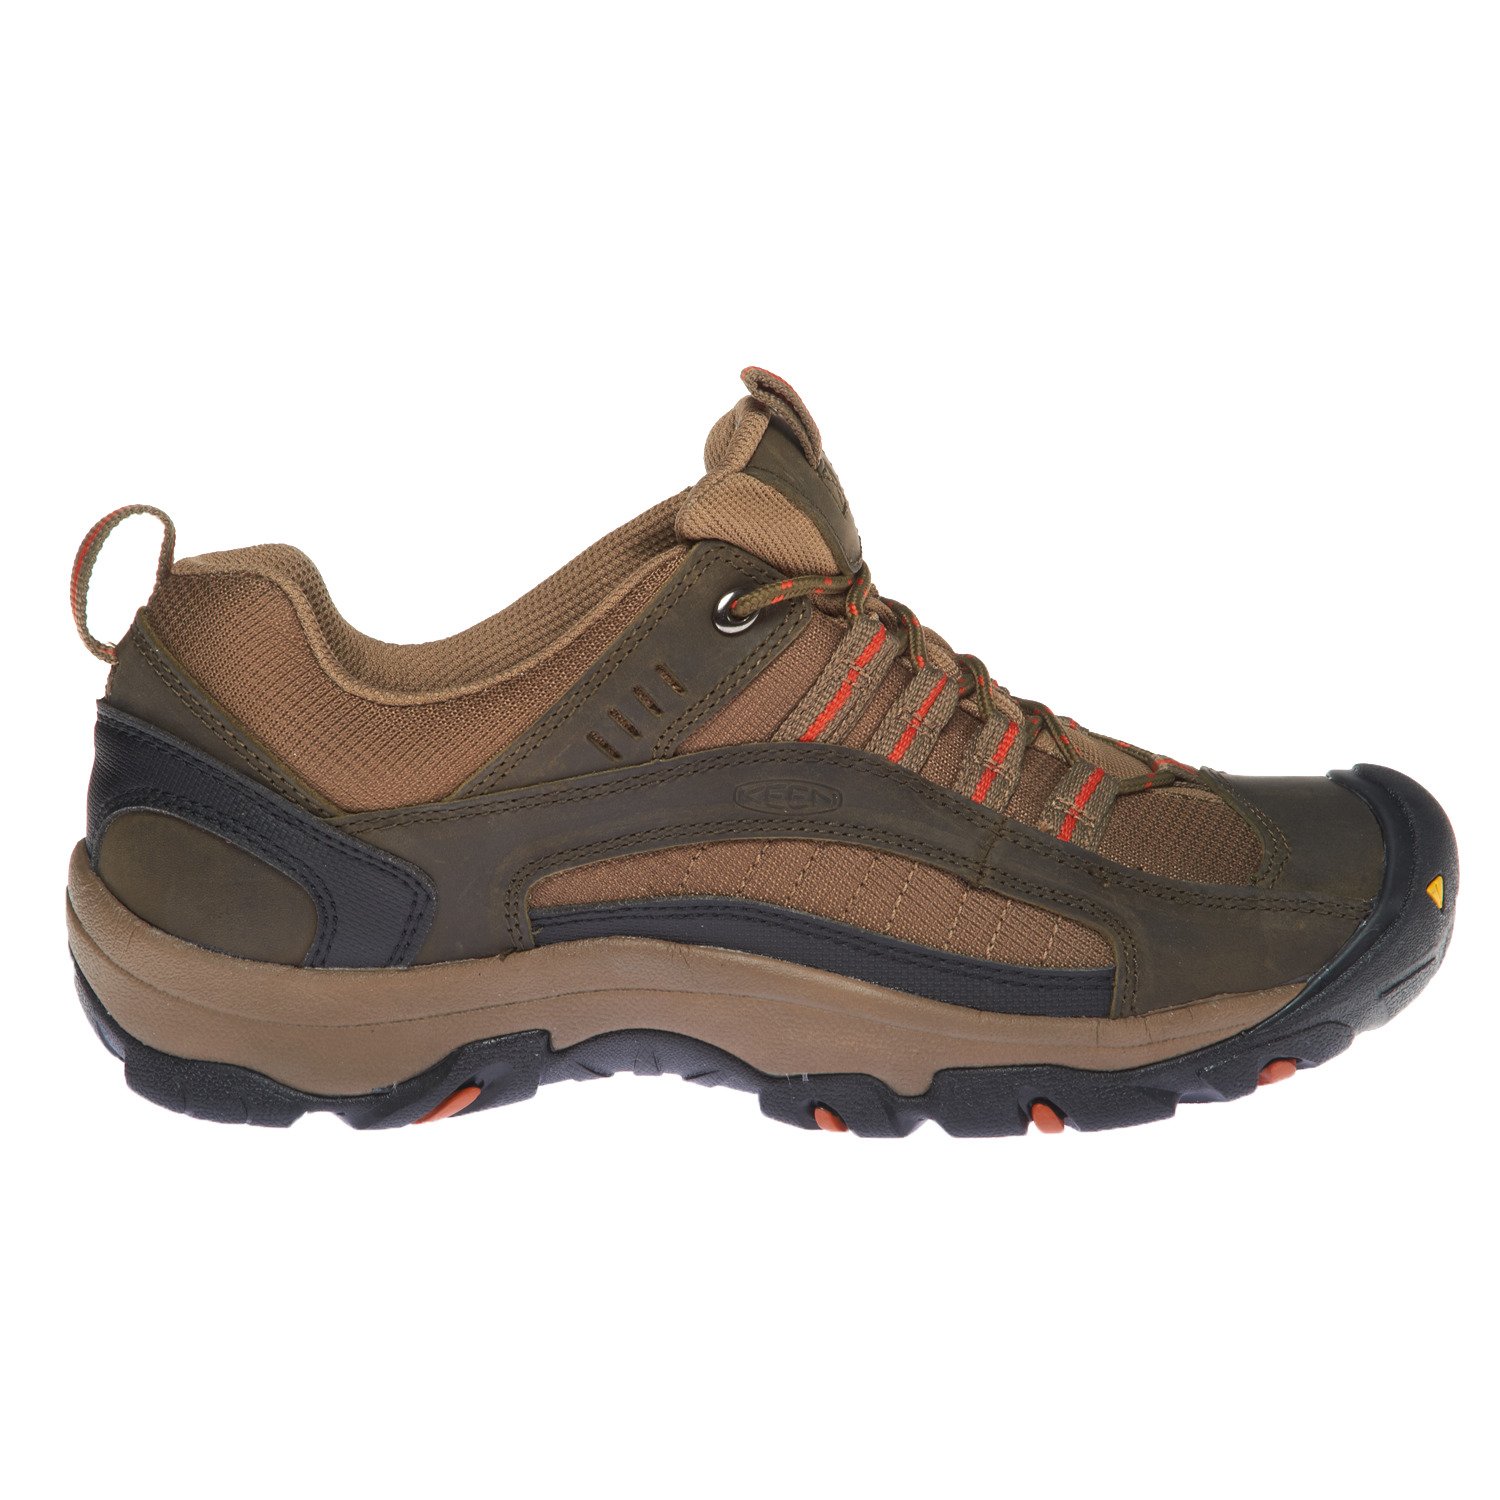 Customer Reviews for KEEN KEEN Men's Zion Hiking Shoes